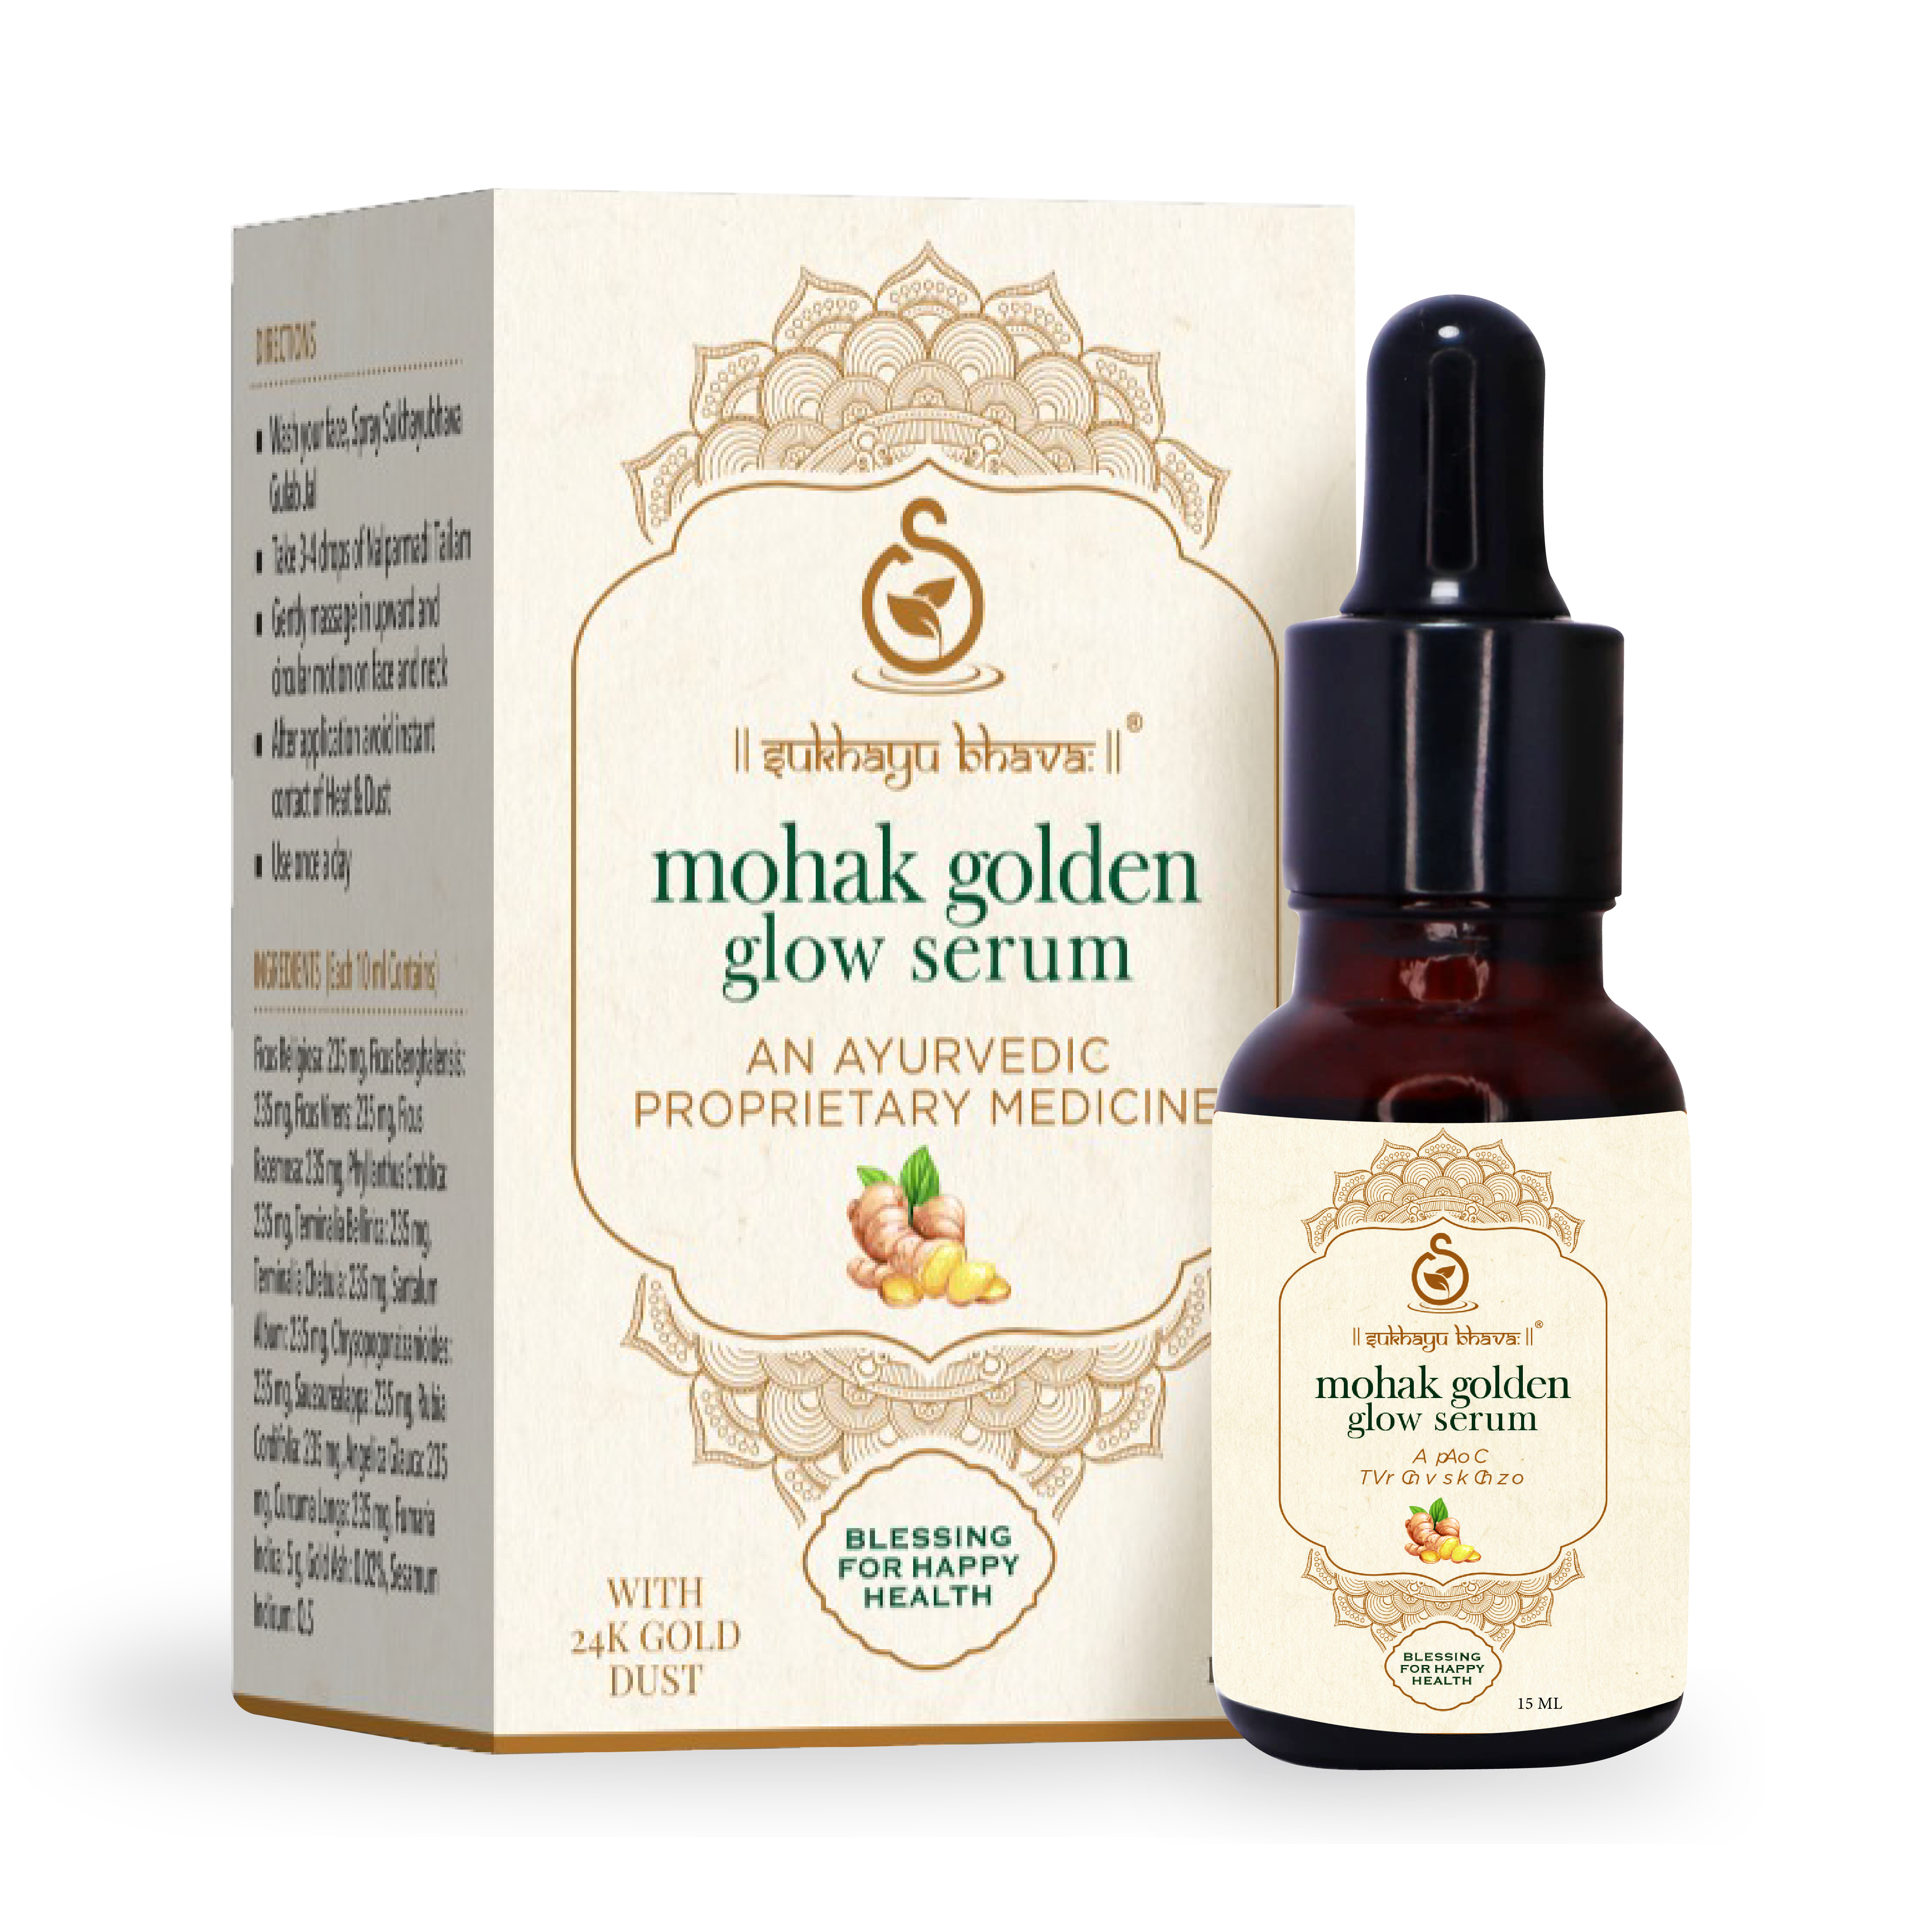 Mohak Golden Glow serum with 24k Gold Ash